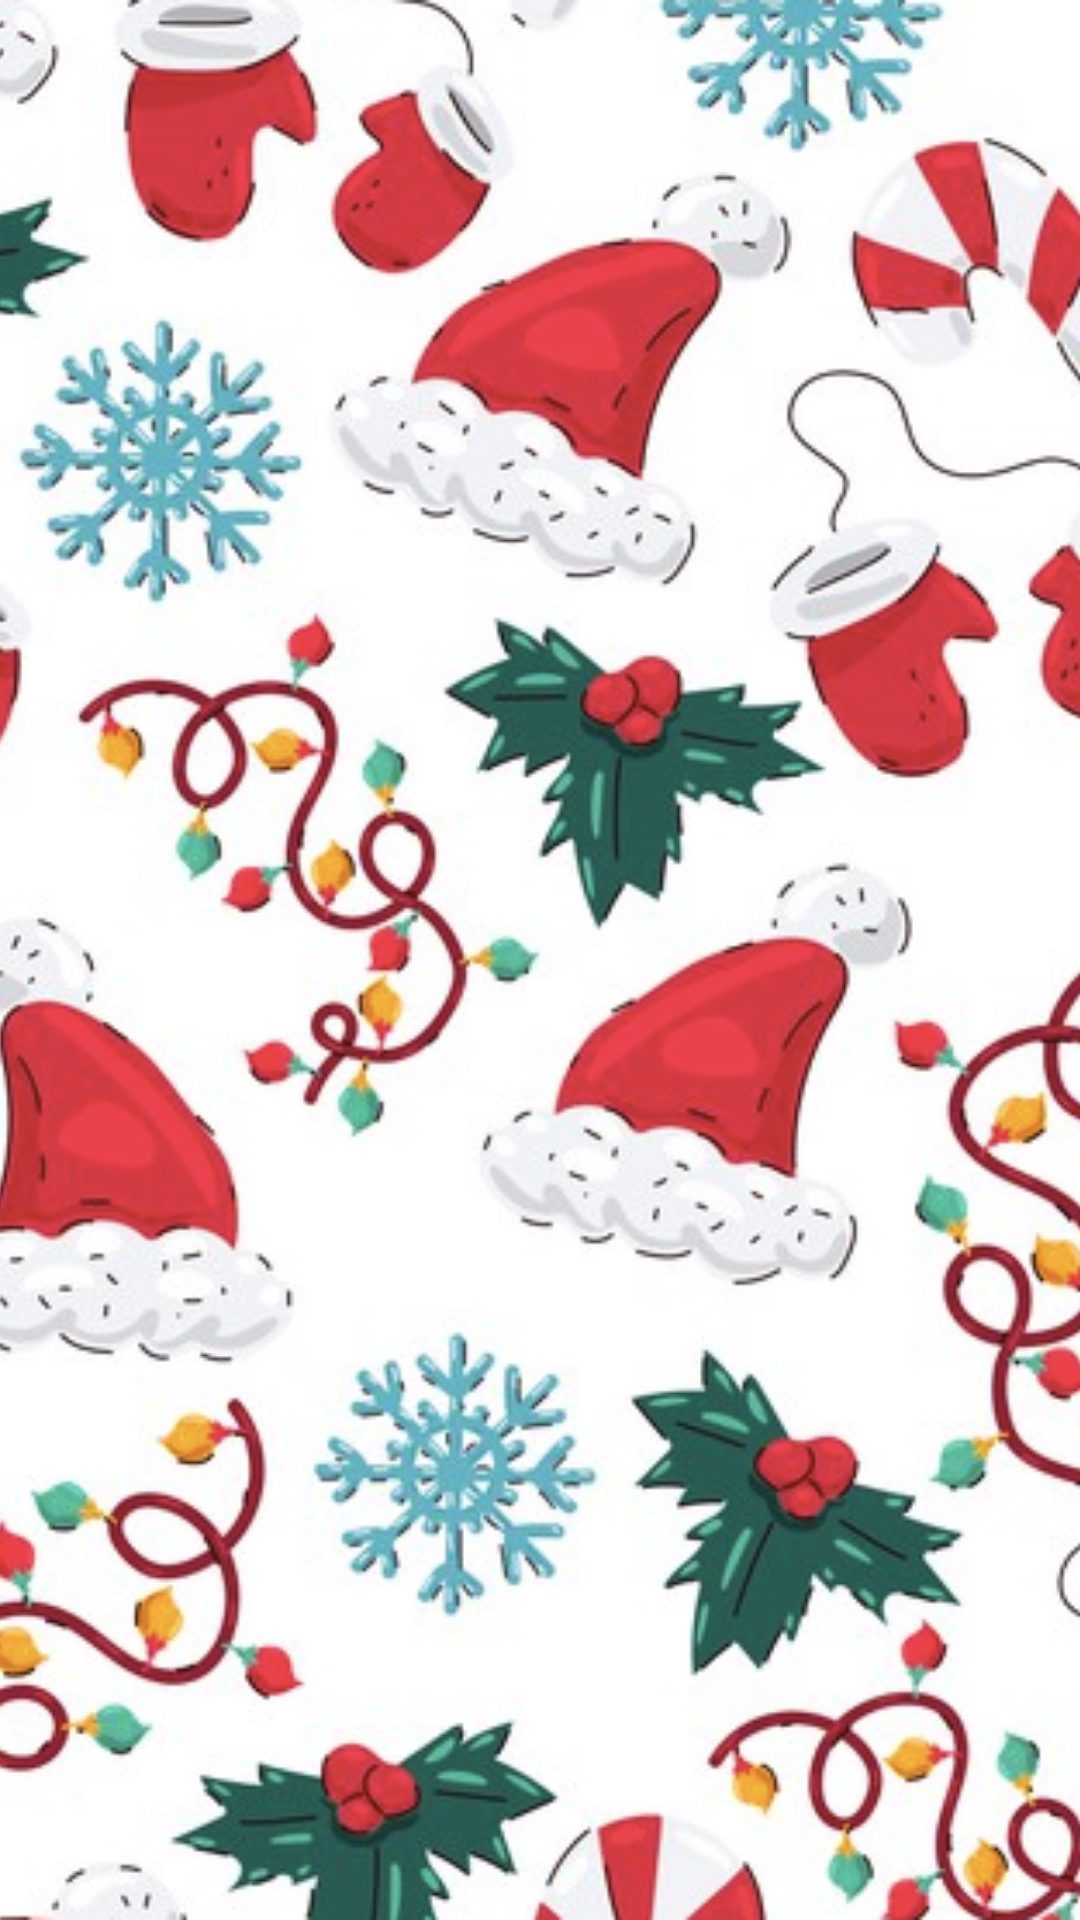 Aesthetic Christmas Backgrounds